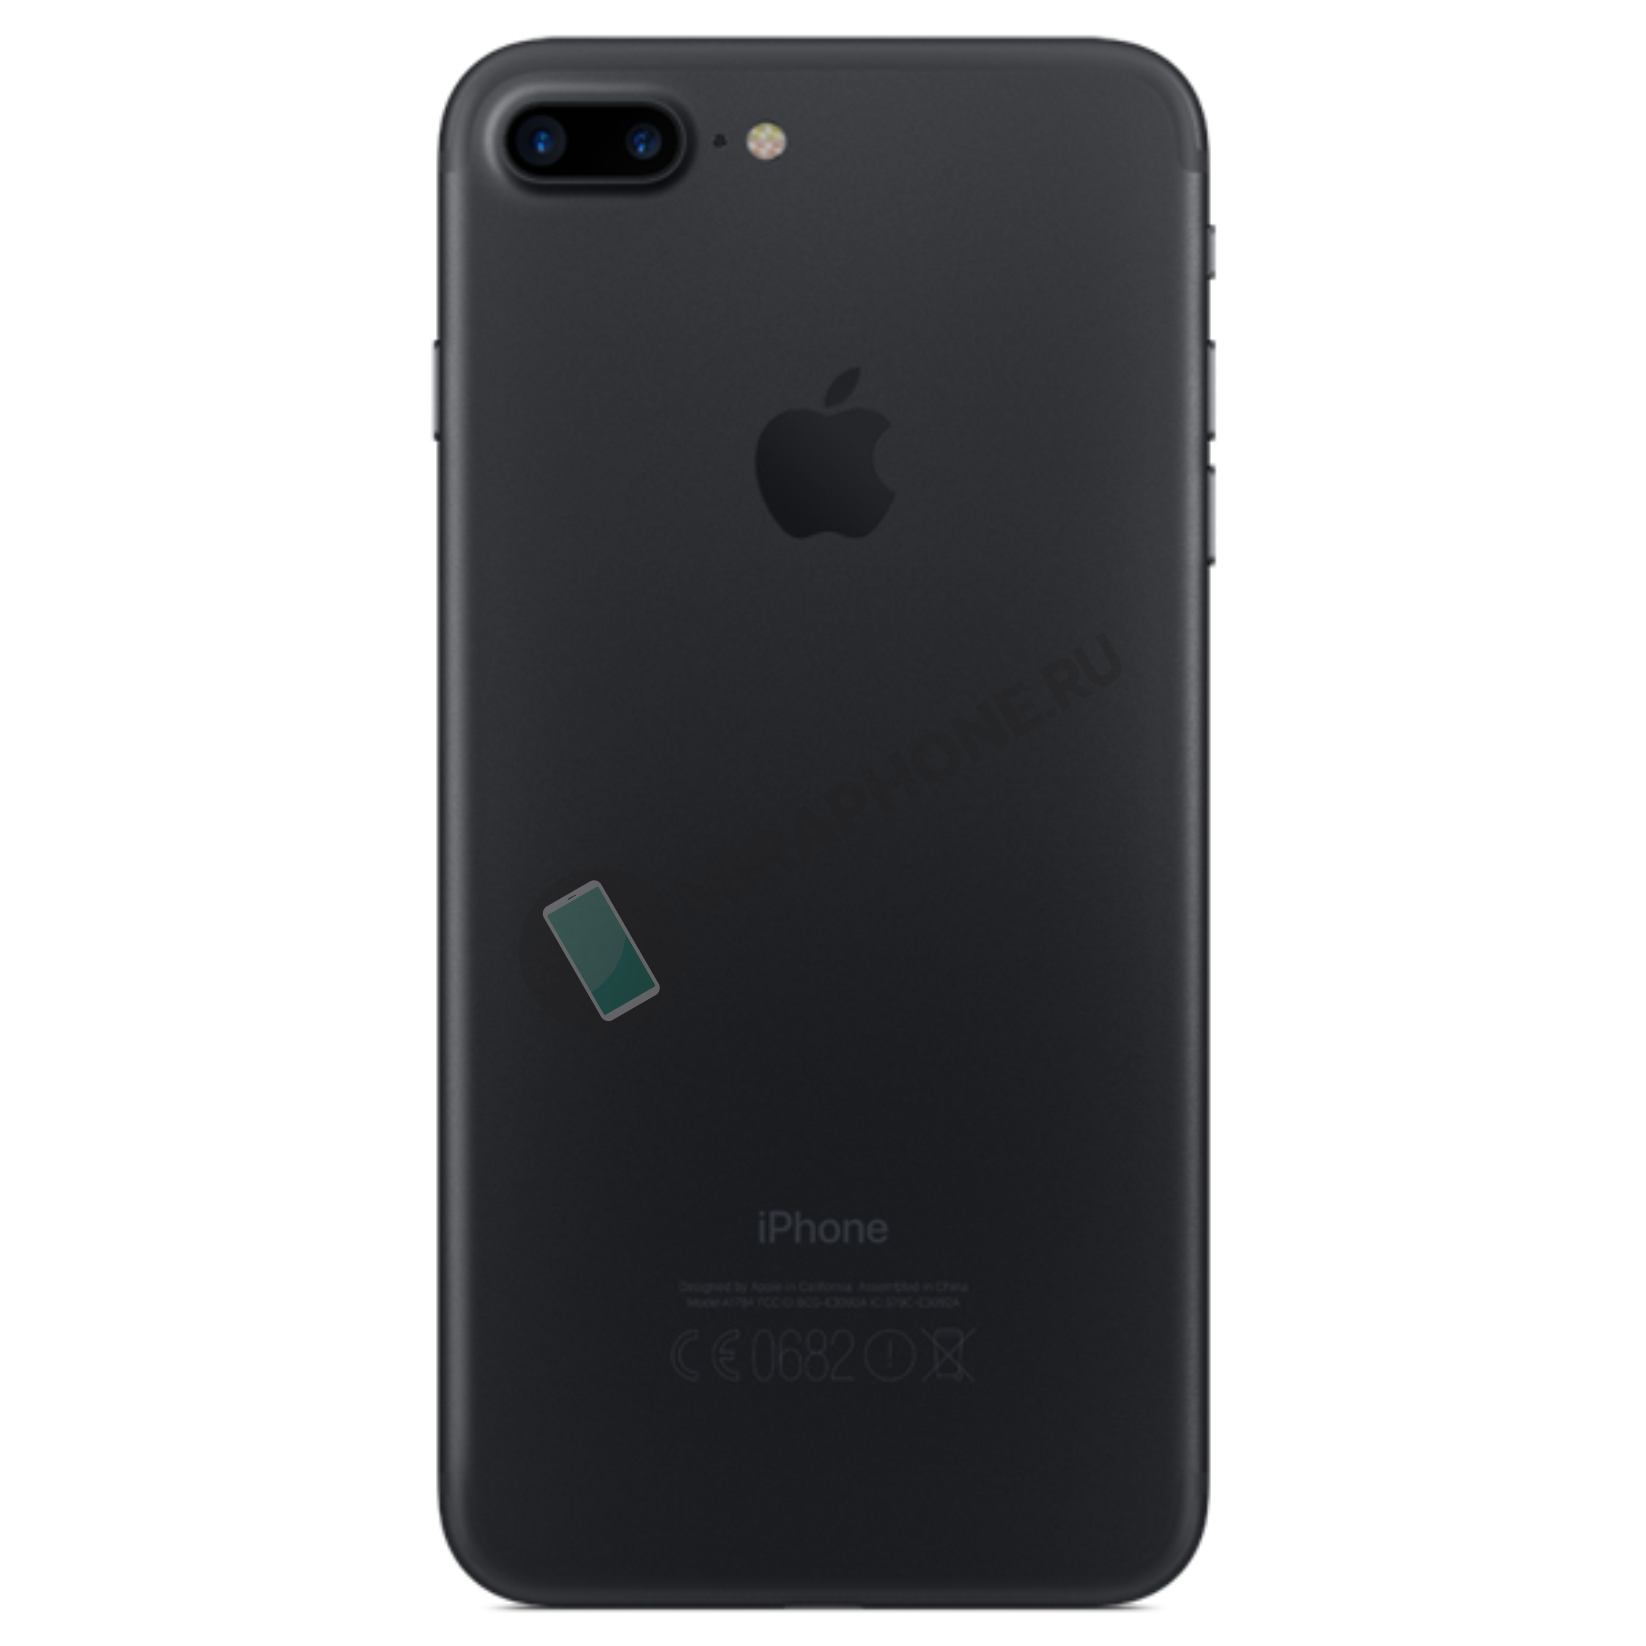 Плюс 7. Apple iphone 7 Plus 32gb Black. Iphone 7 Plus 128gb Black. Айфон 7 плюс 256 ГБ черный. Iphone 7 32gb Black.